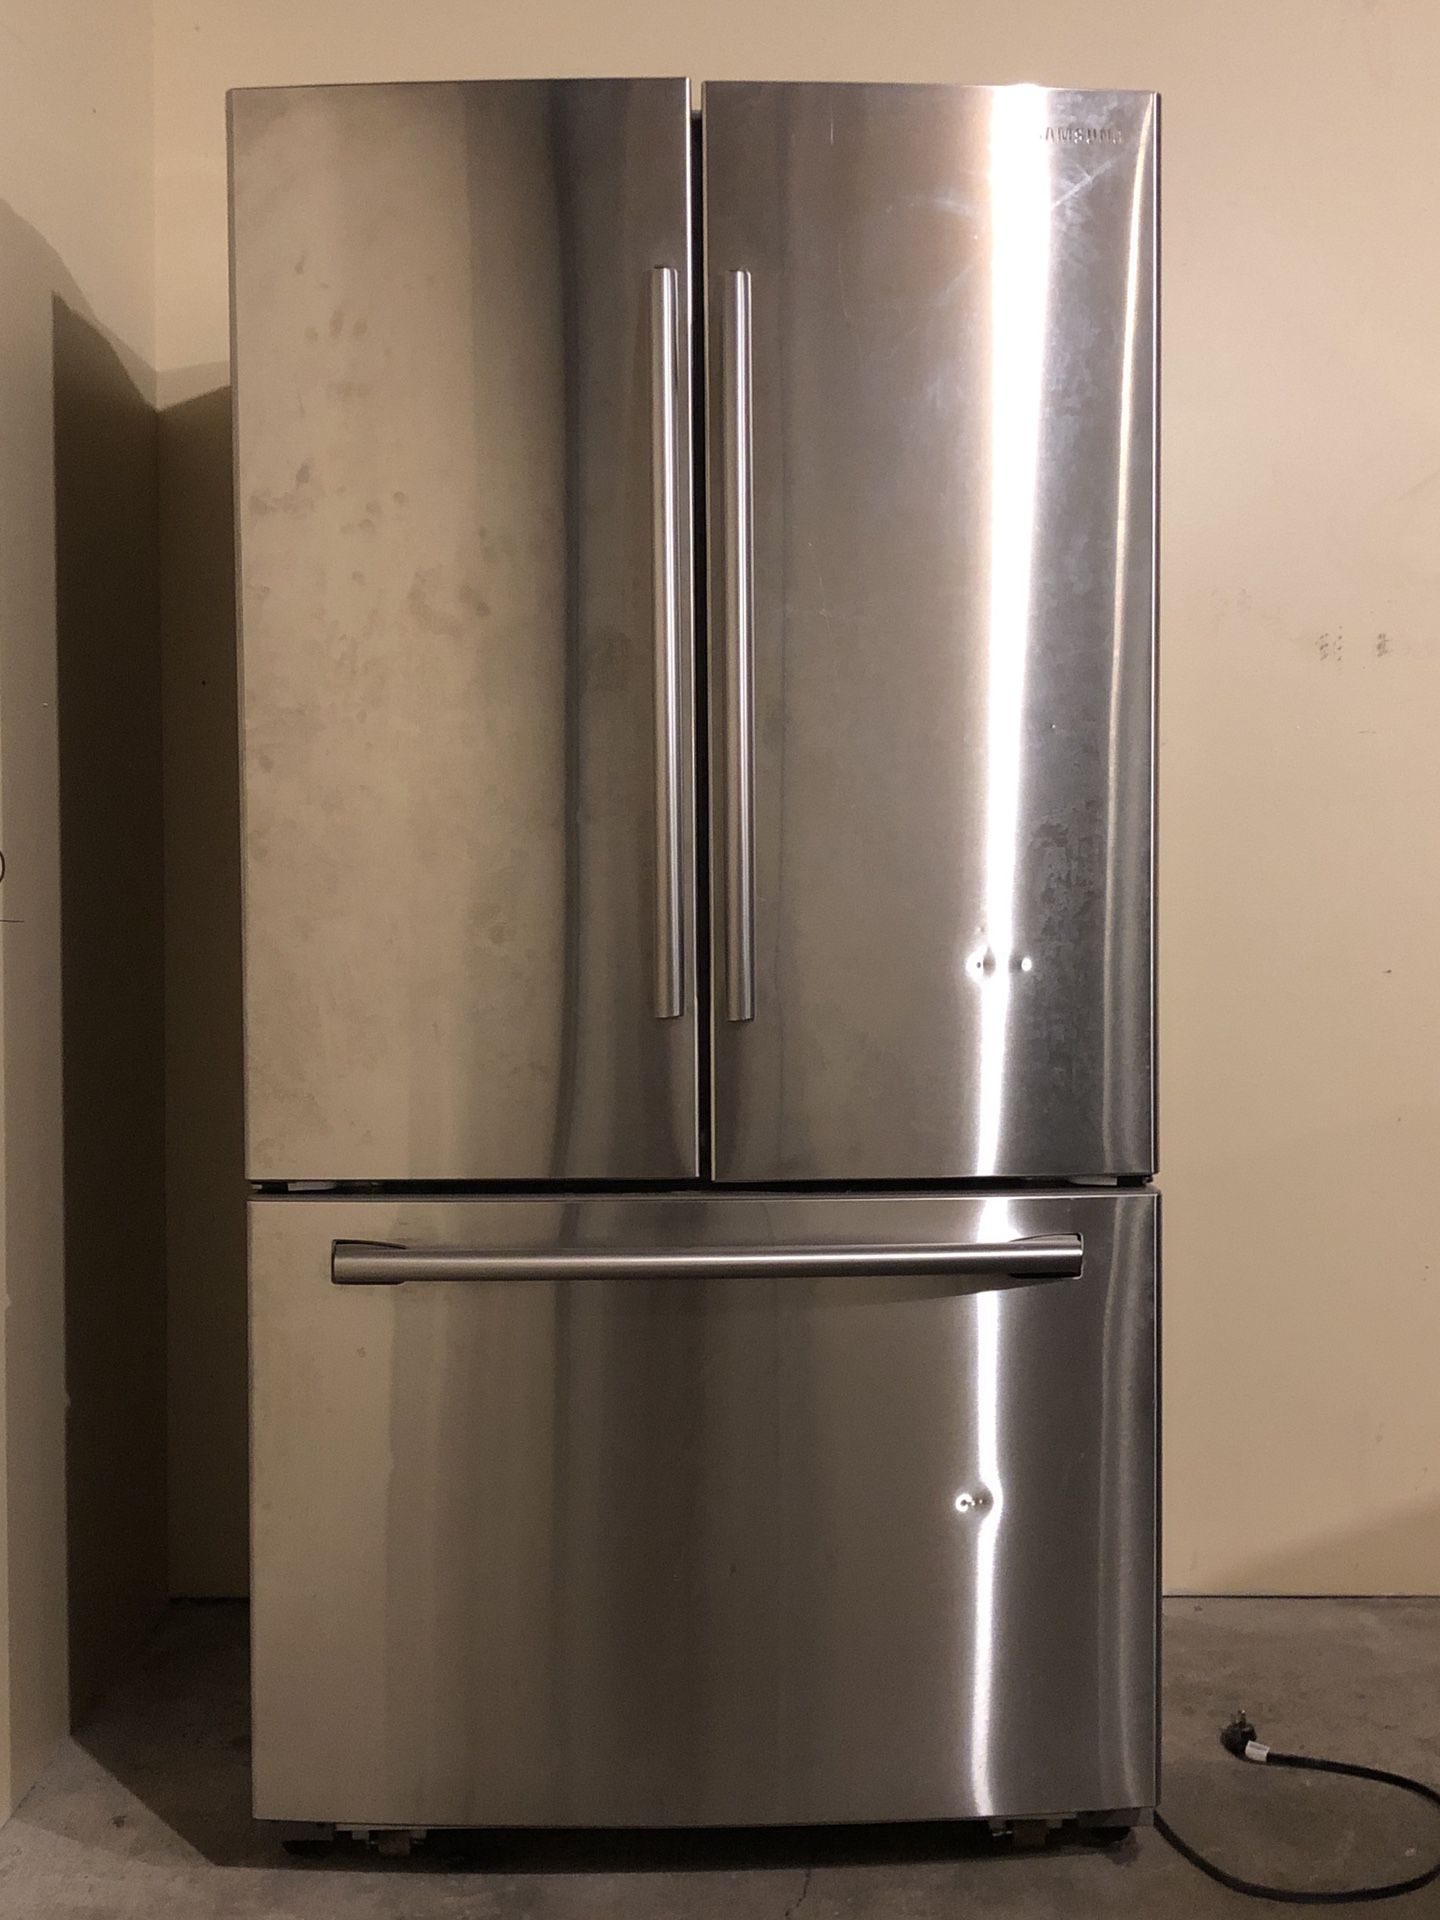 Samsung fridge / refrigerator model RF260BEAESR